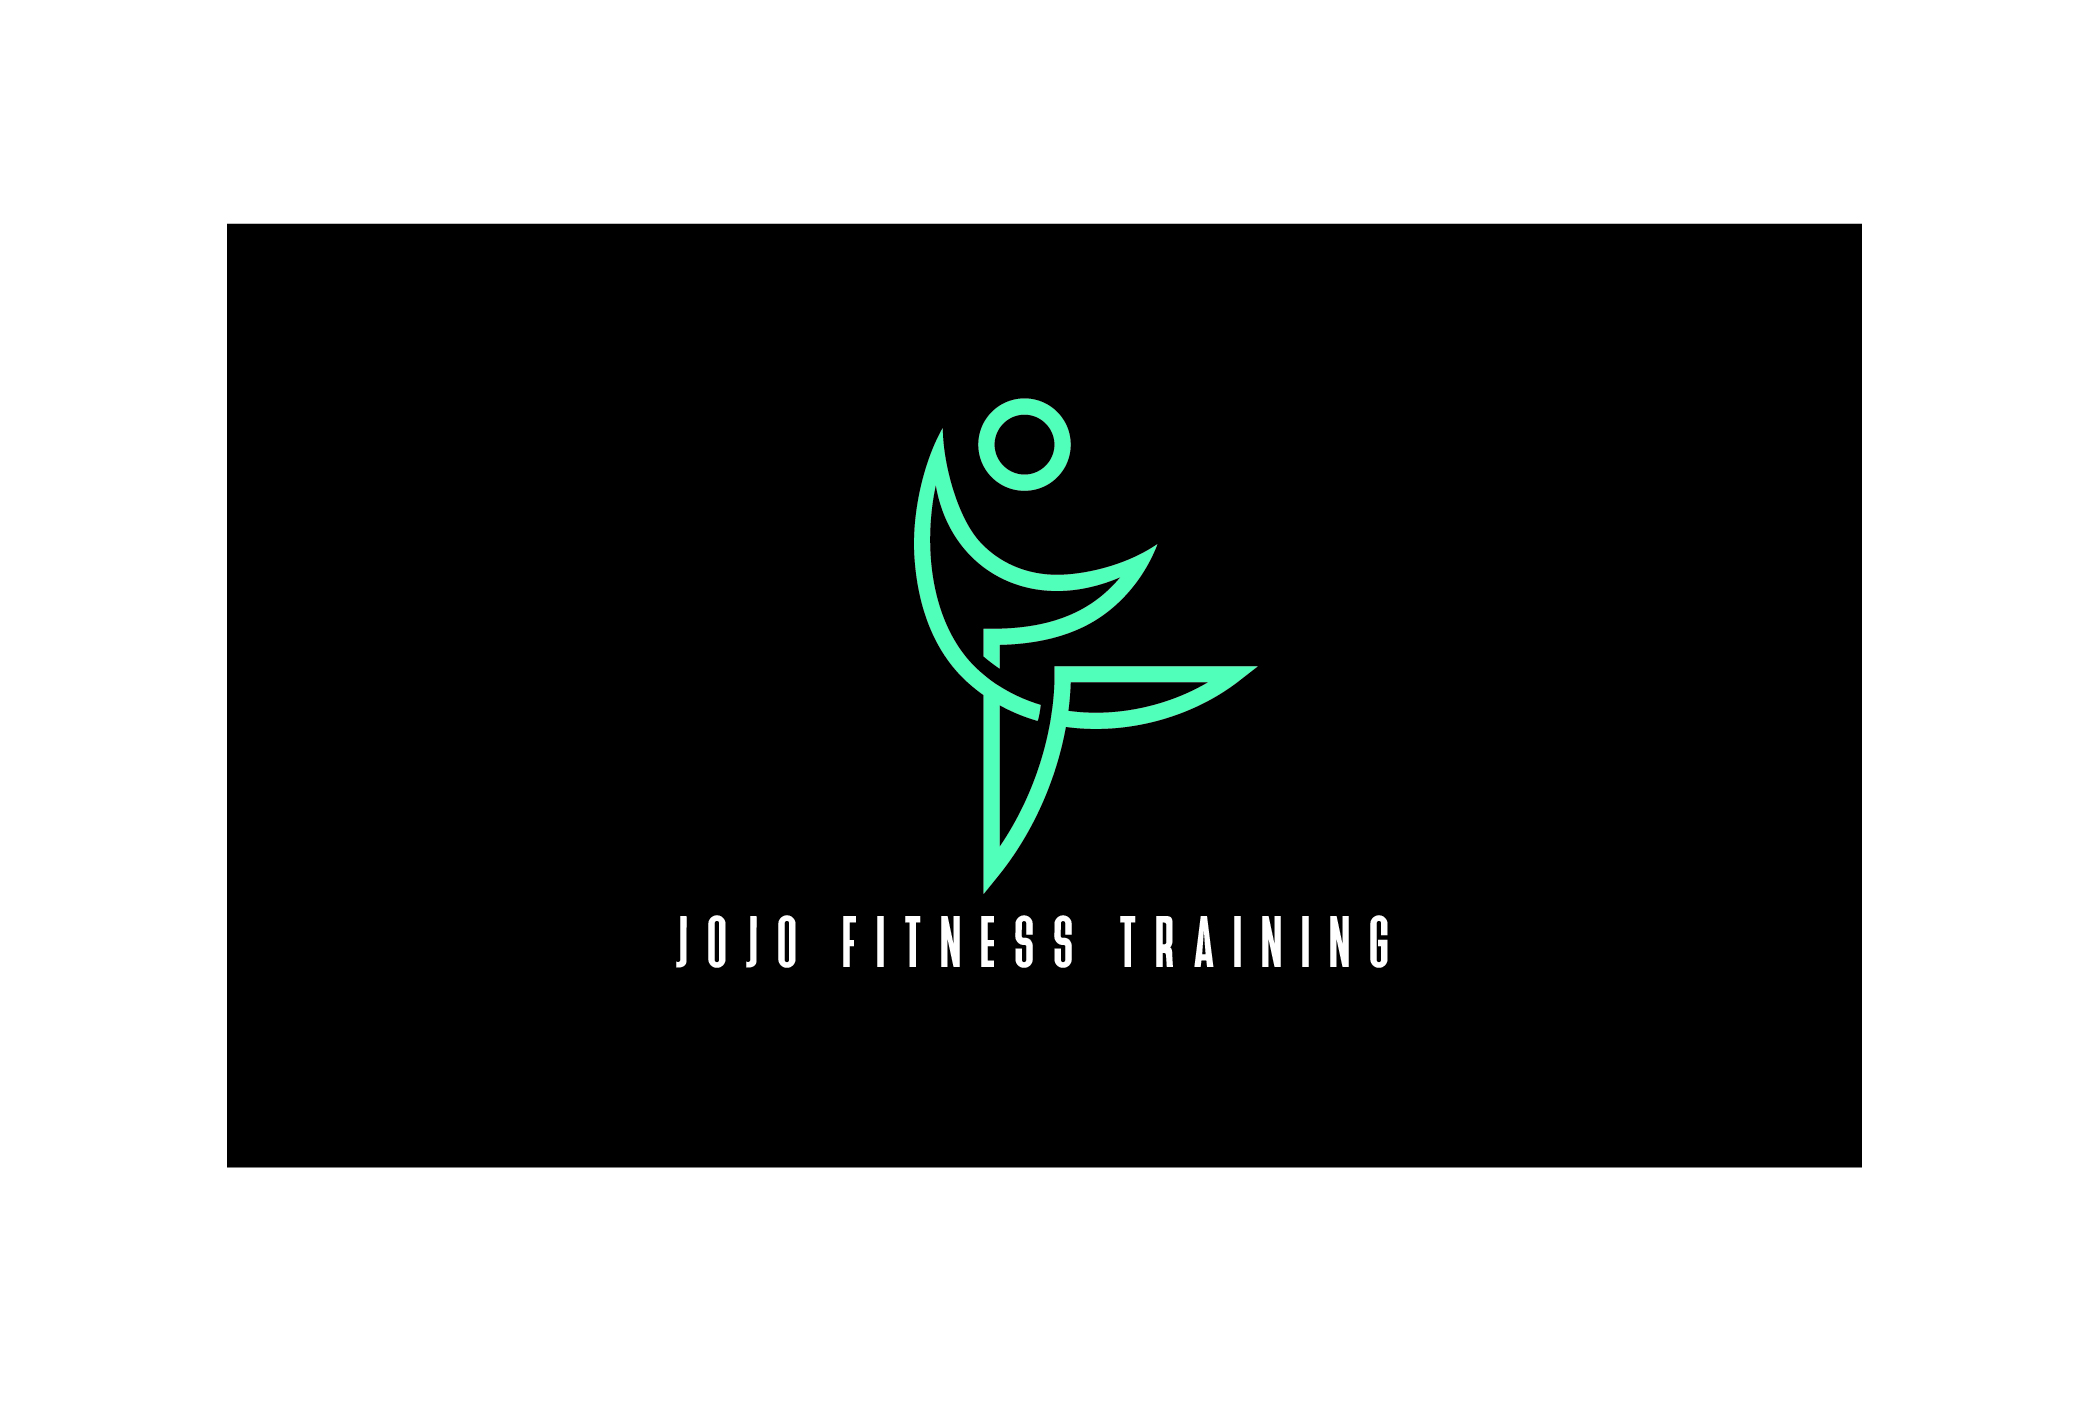 JoJo Fitness Training